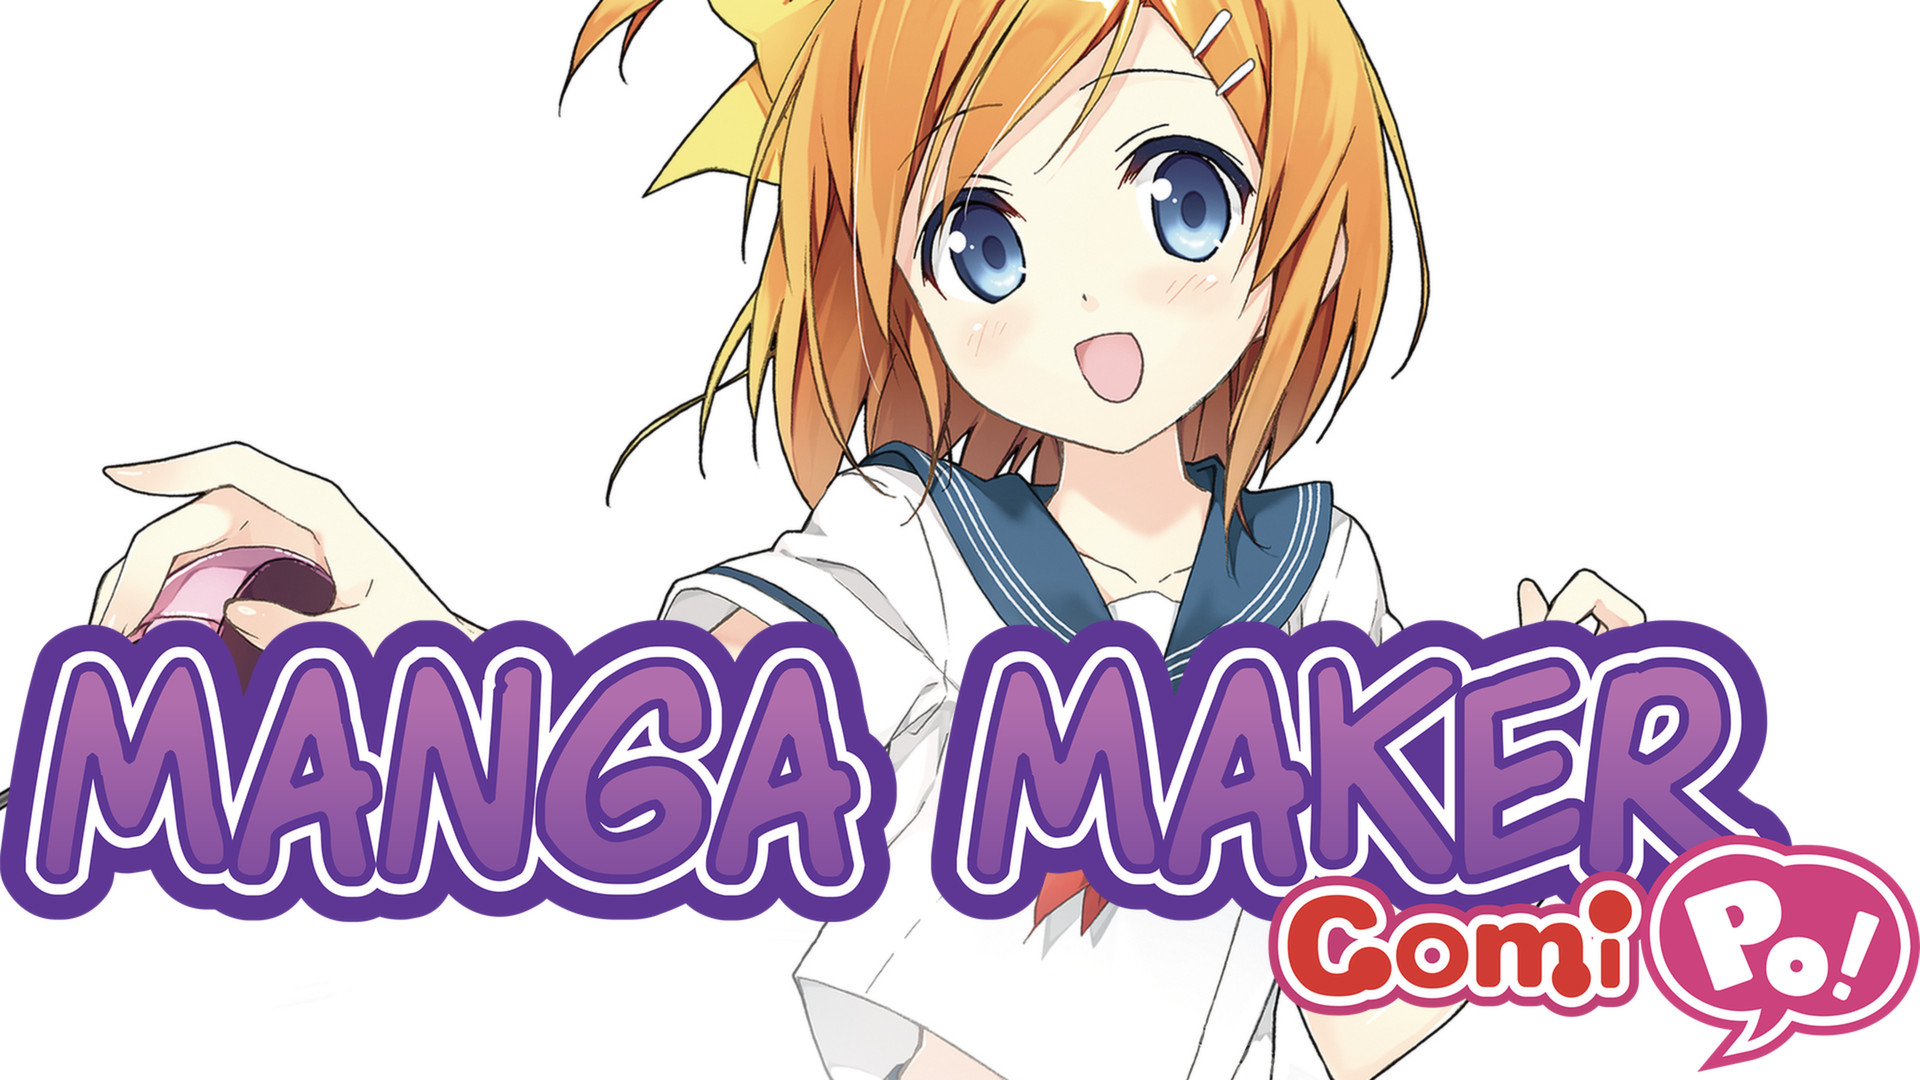 manga maker comipo! and blender